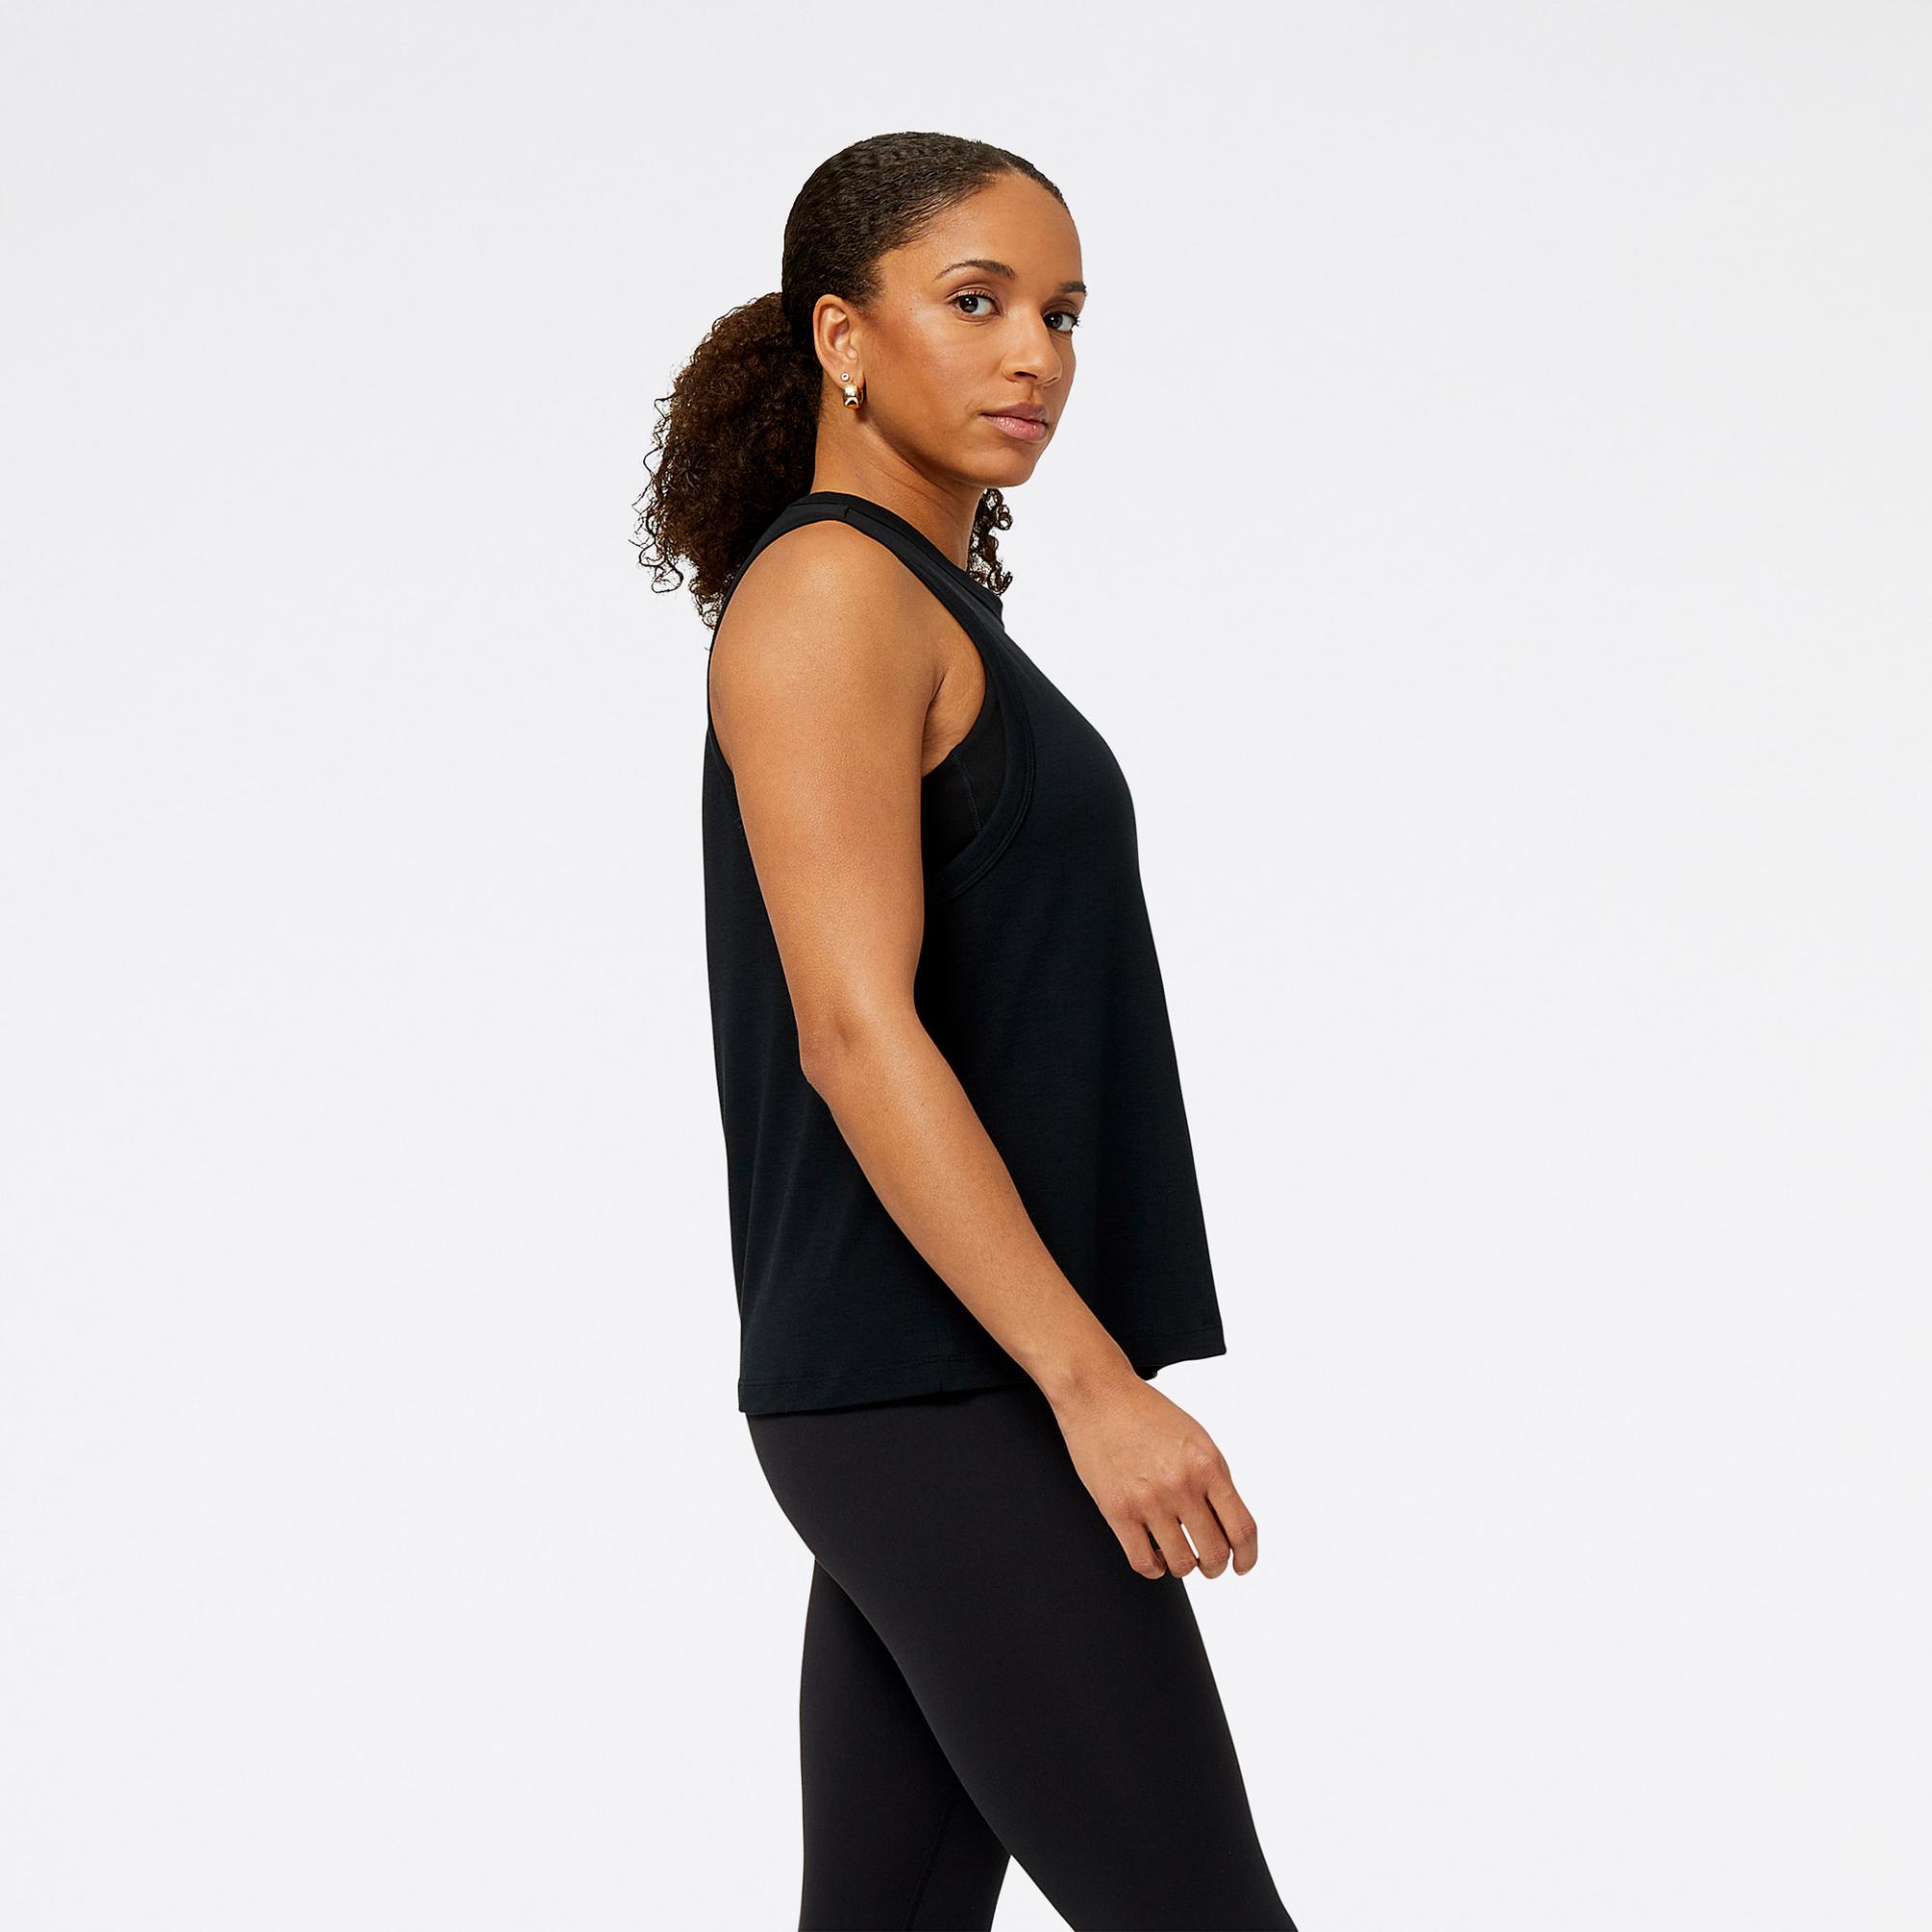  New Balance Achiever Kadın Siyah Atlet